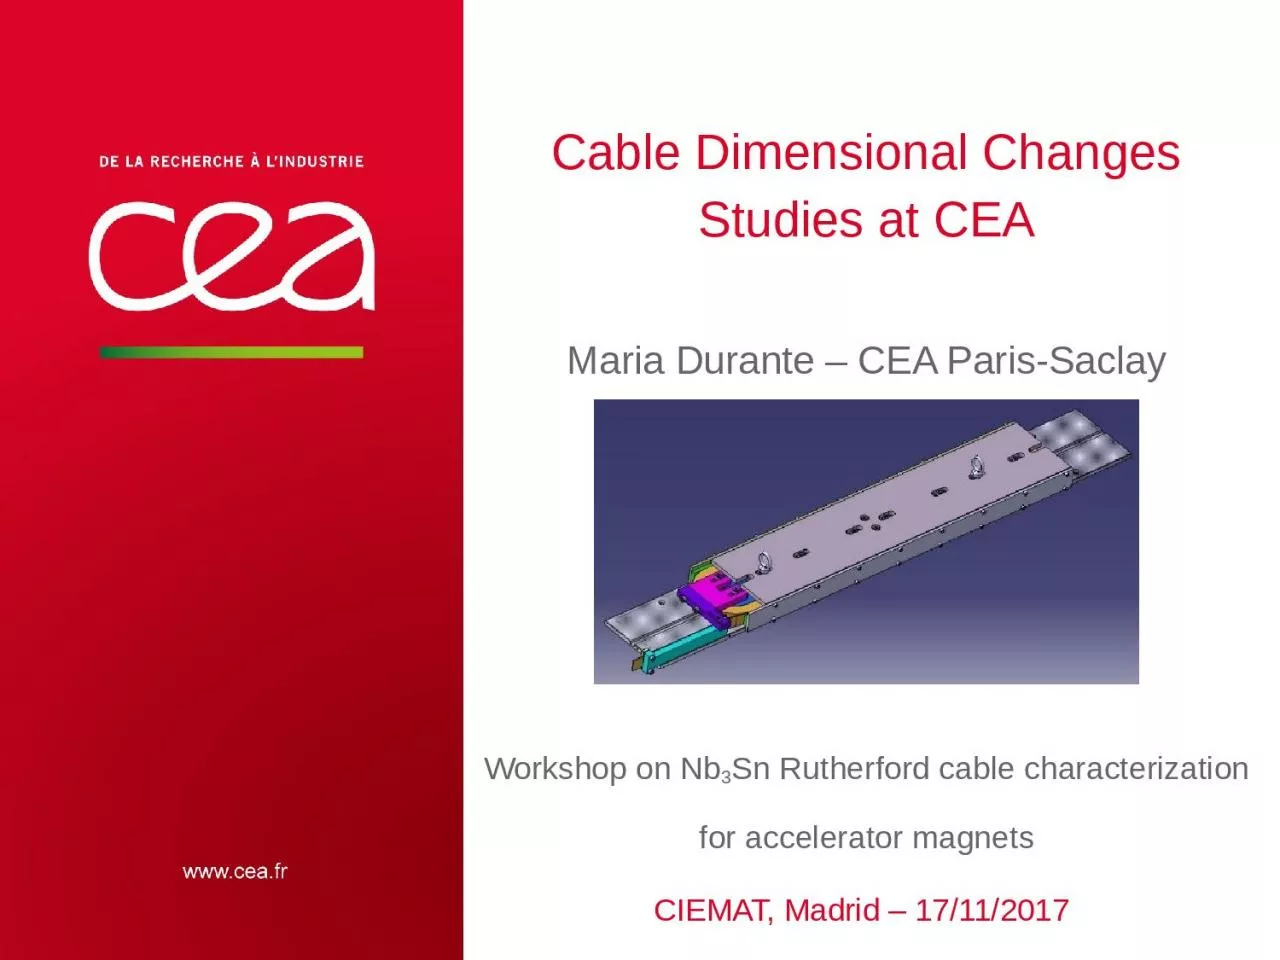 Cable Dimensional Changes Studies at CEA